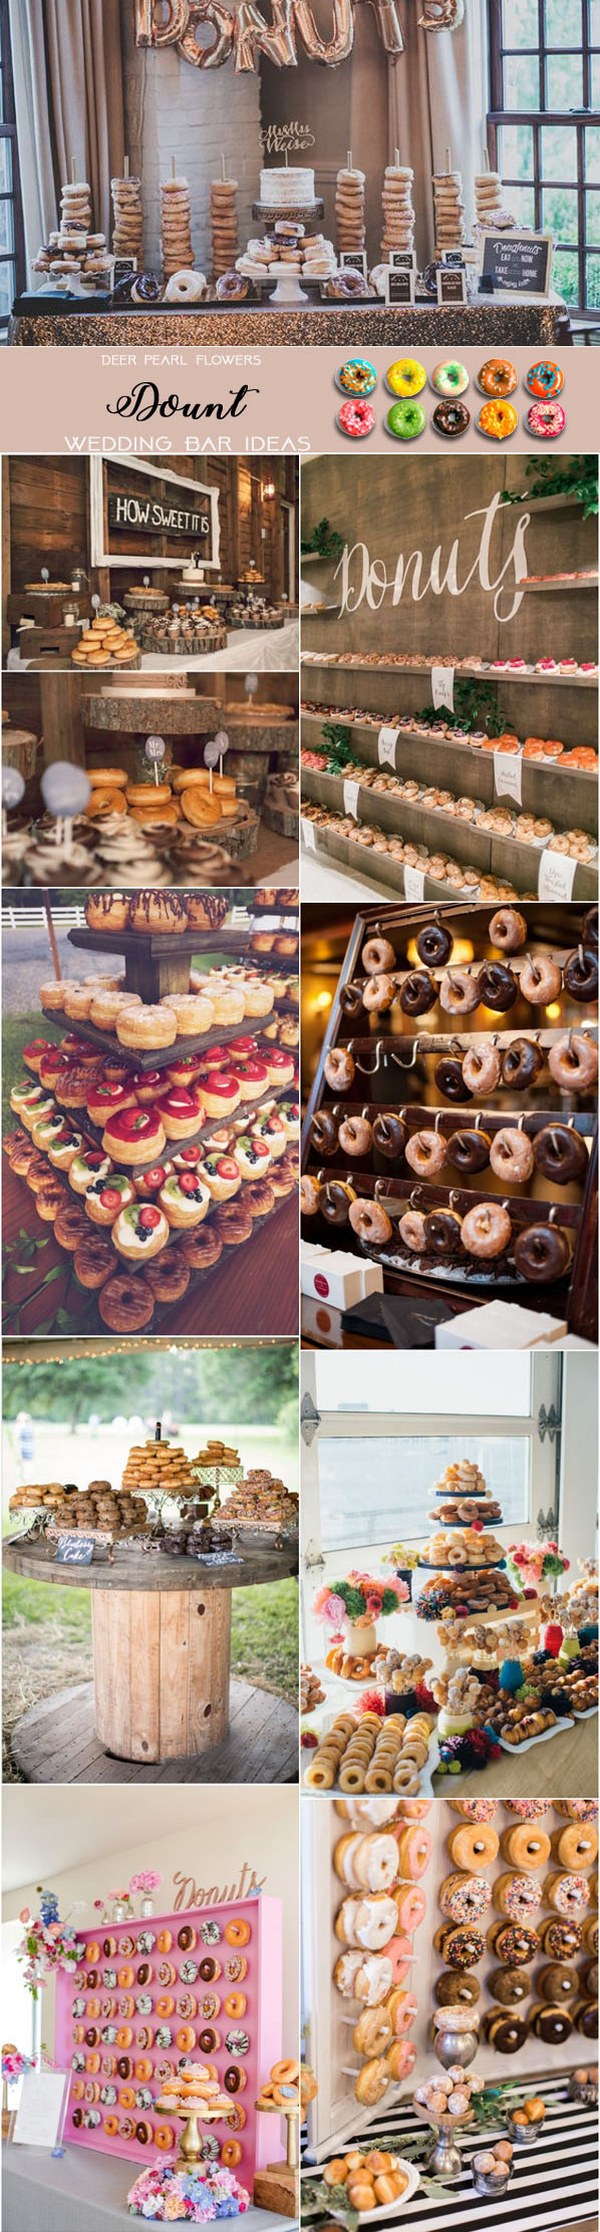 Dount wedding dessert food bar ideas for wedding reception